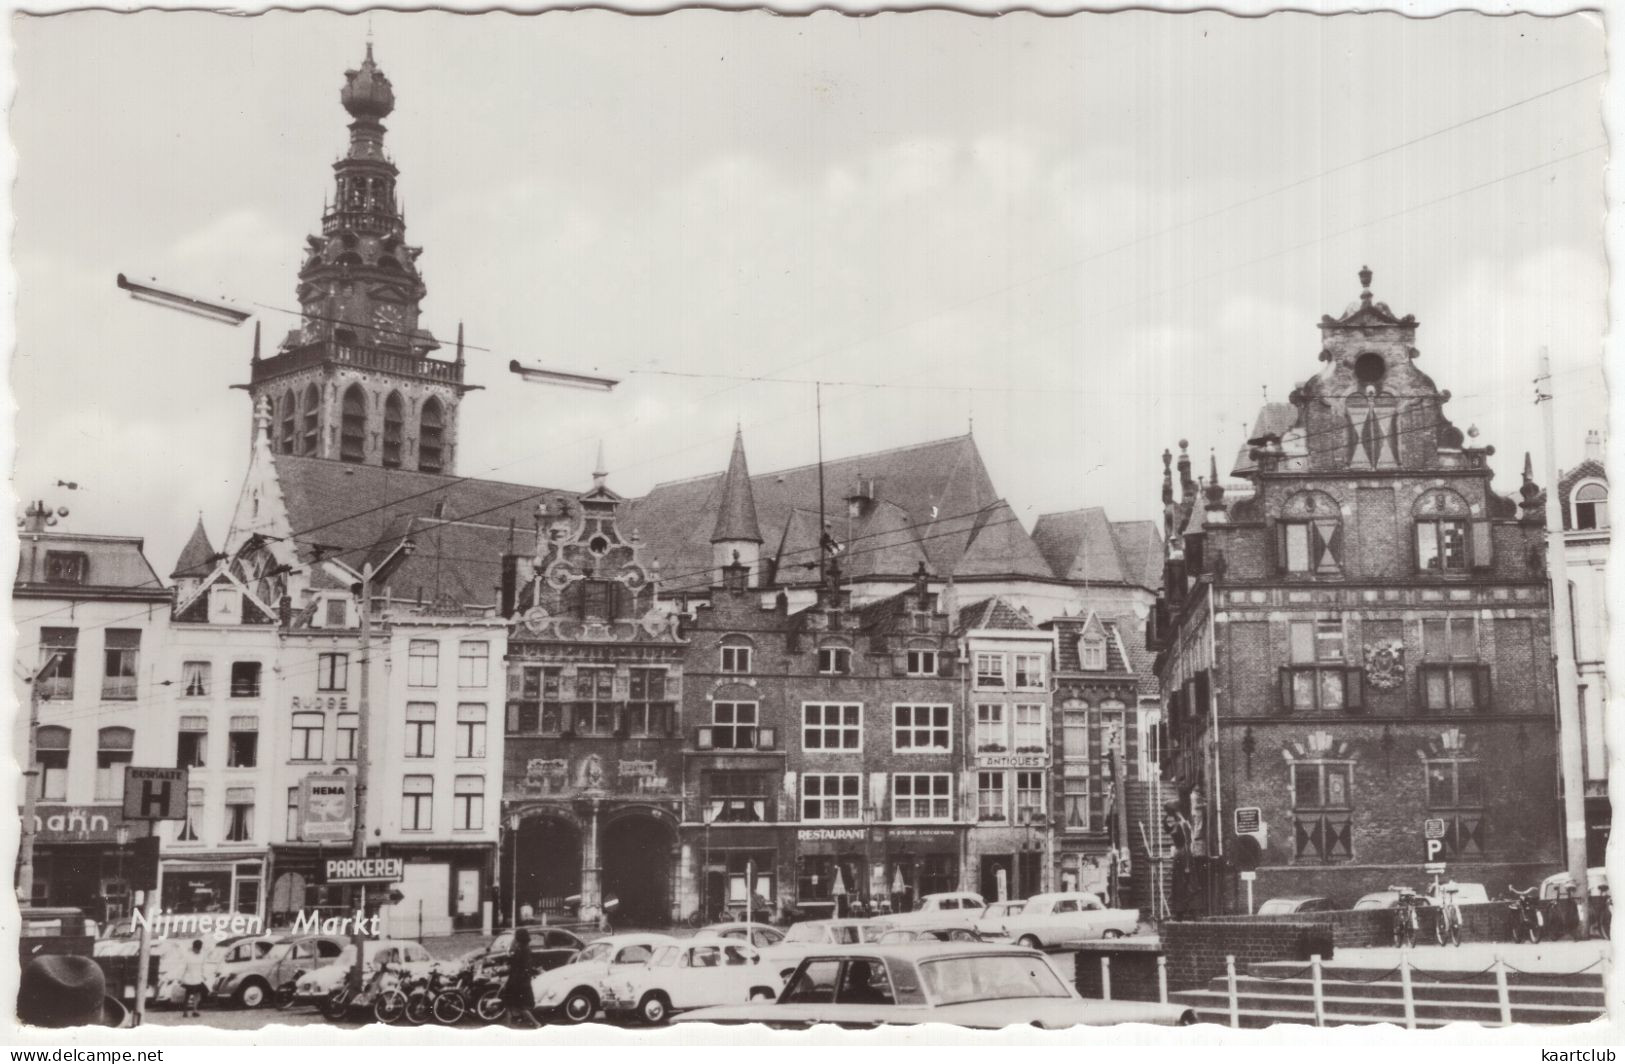 Nijmegen: FORD FAIRLANE '54, TAUNUS P2, FIAT 600, VW 1200 KÄFER/COX, CITROËN 2CV, SOLEX - Markt - (Holland) - Passenger Cars